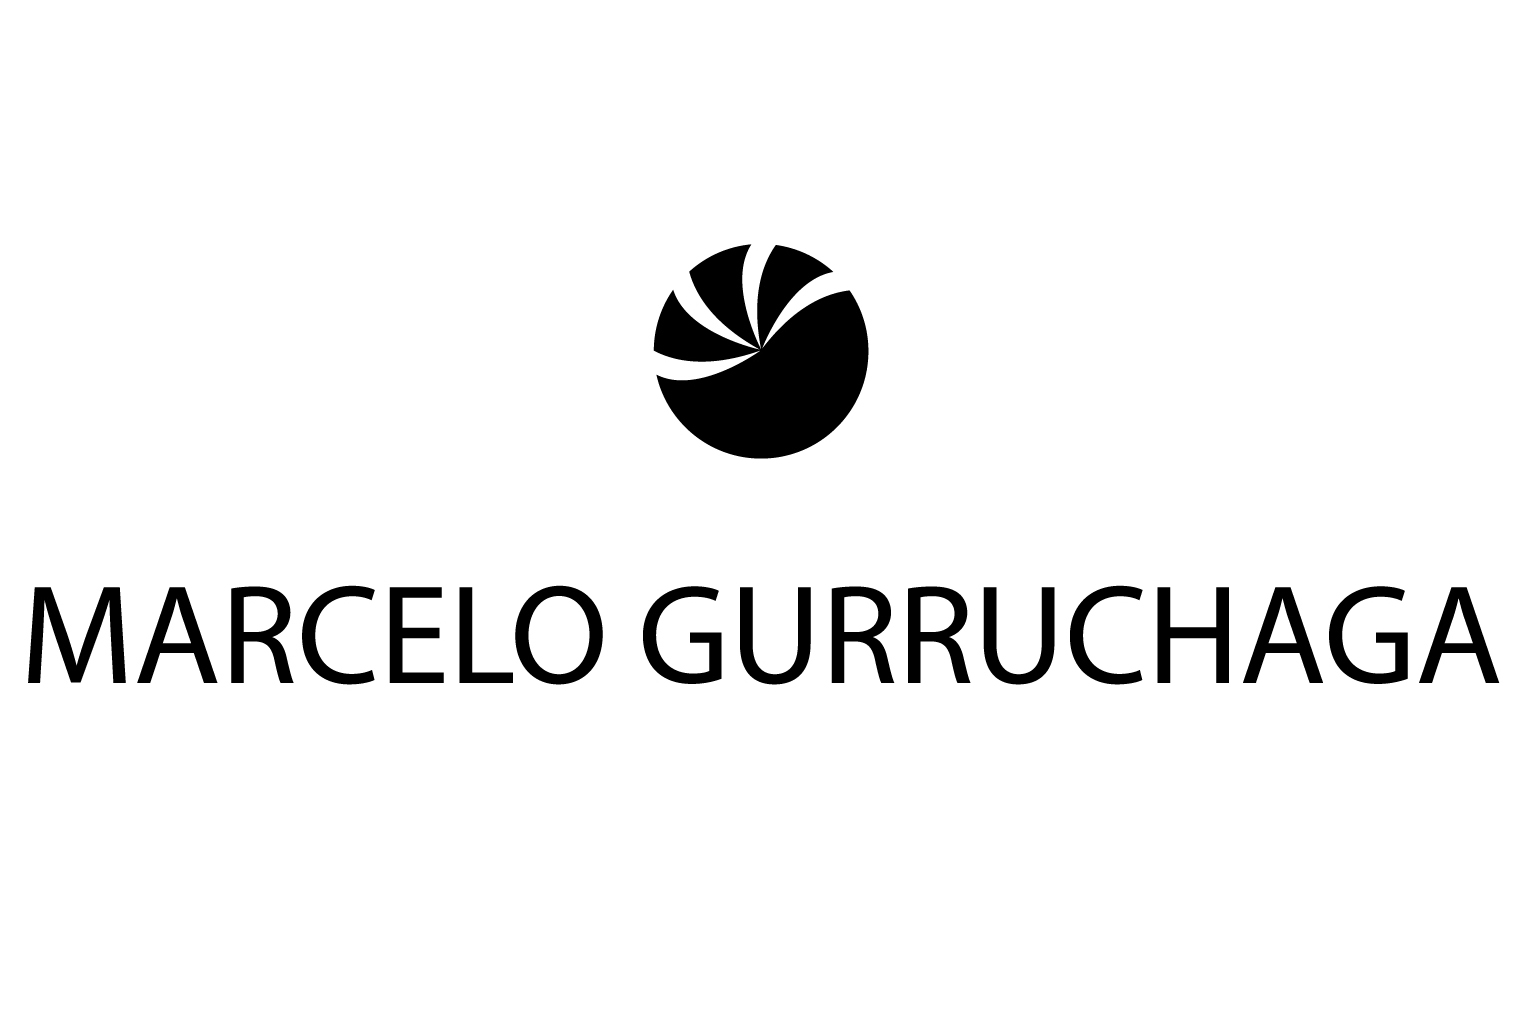 MARCELO GURRUCHAGA